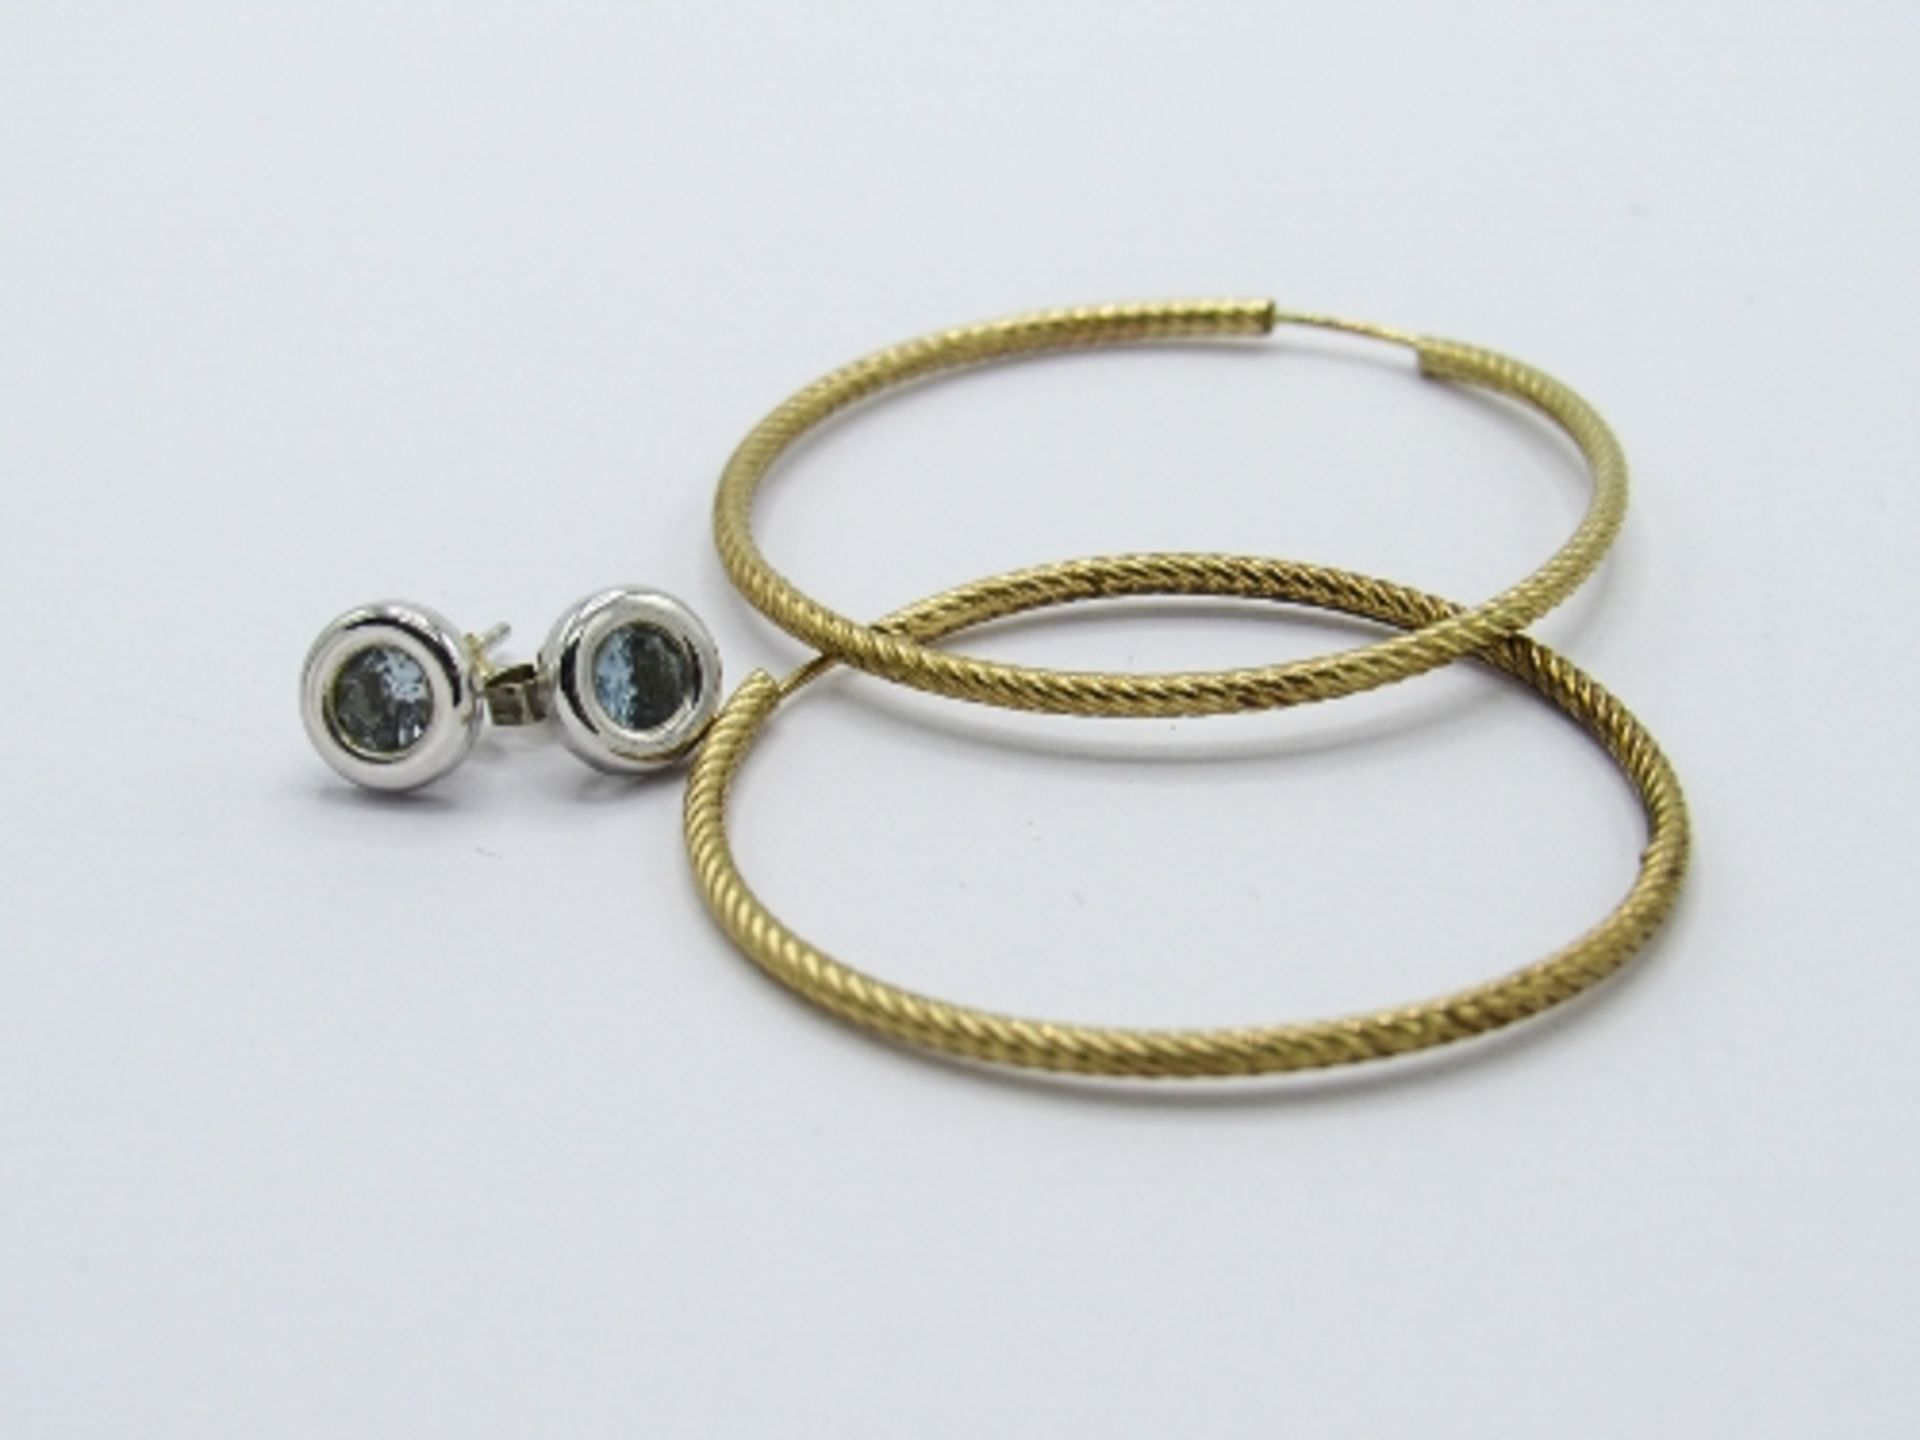 White metal peridot stud earrings with 9ct gold backs & a pair of yellow metal hooped earrings. - Image 4 of 4